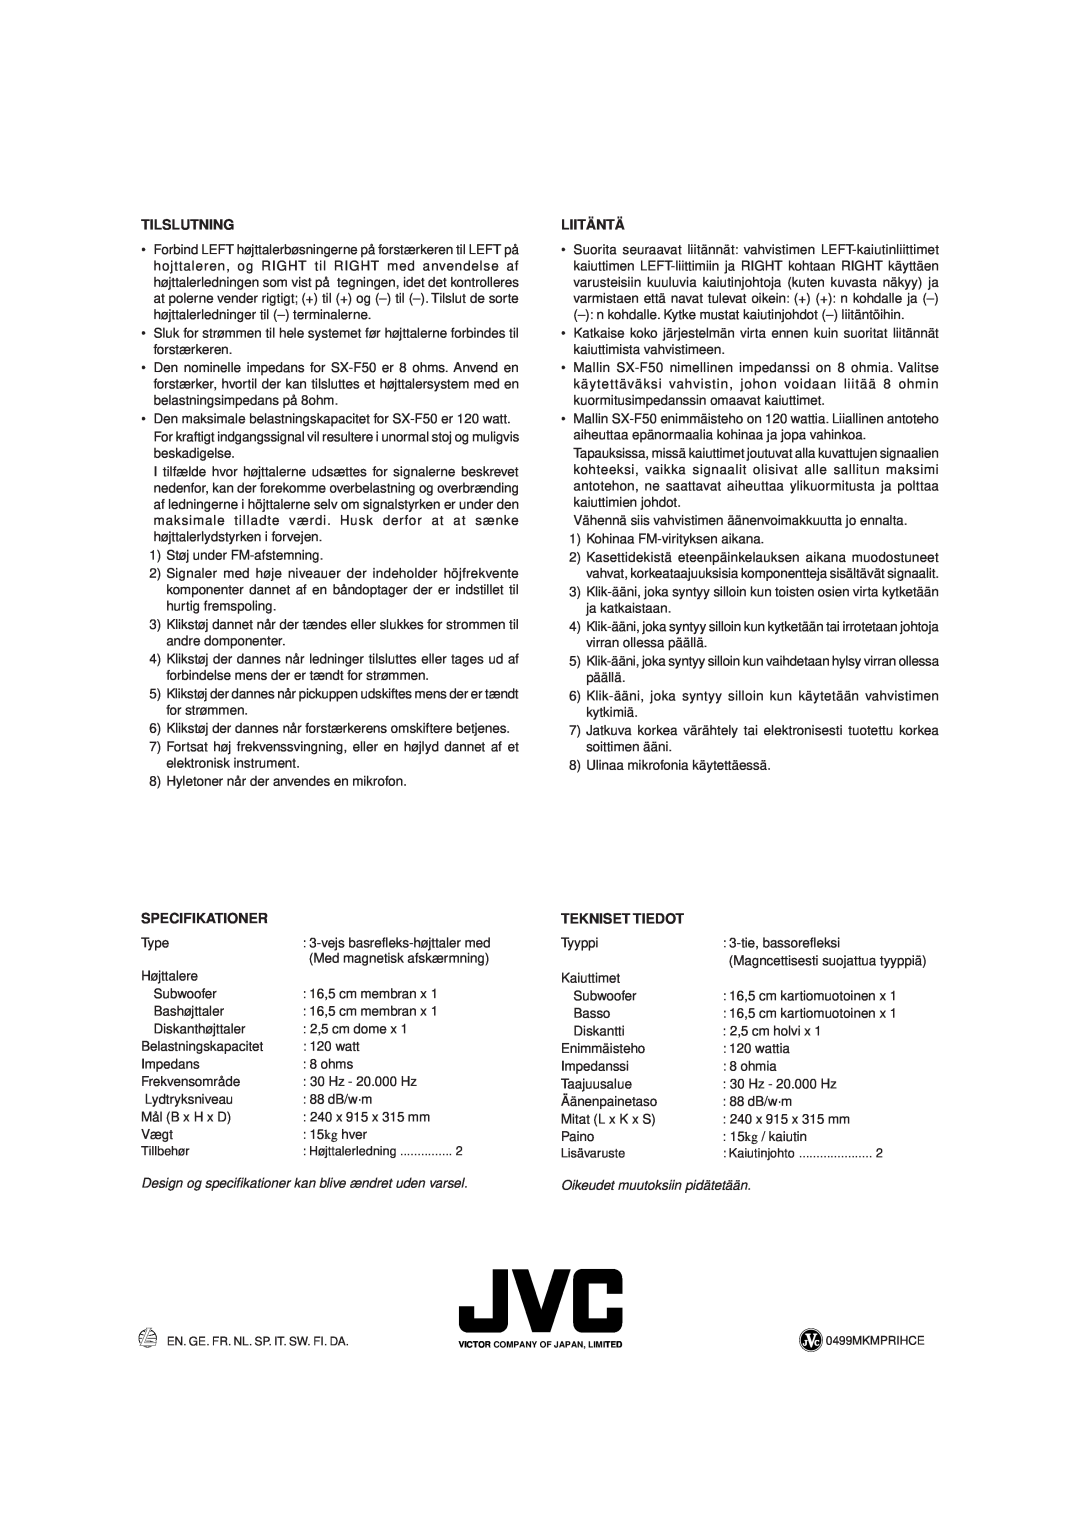 JVC LVT0347-001A, SX-F50 manual Tilslutning, Liitäntä, Specifikationer, Tekniset Tiedot 